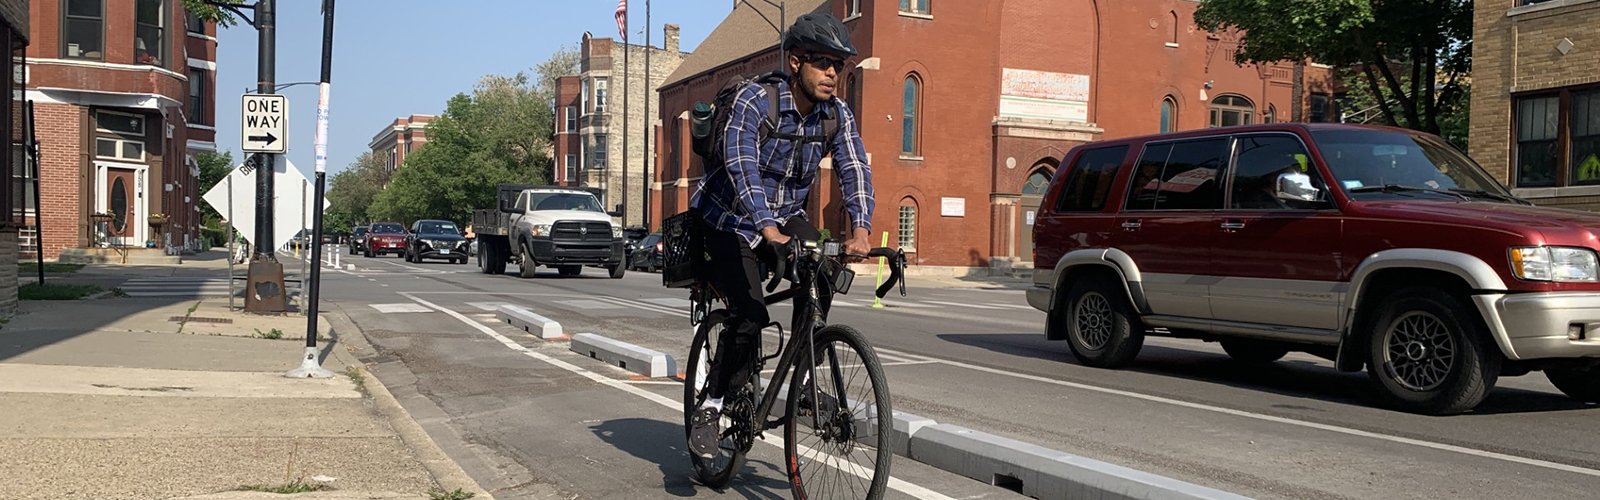 Person riding bike towards viewer on roadway in bike lane with concrete curbs separating bike lane from vehicle travel lane.